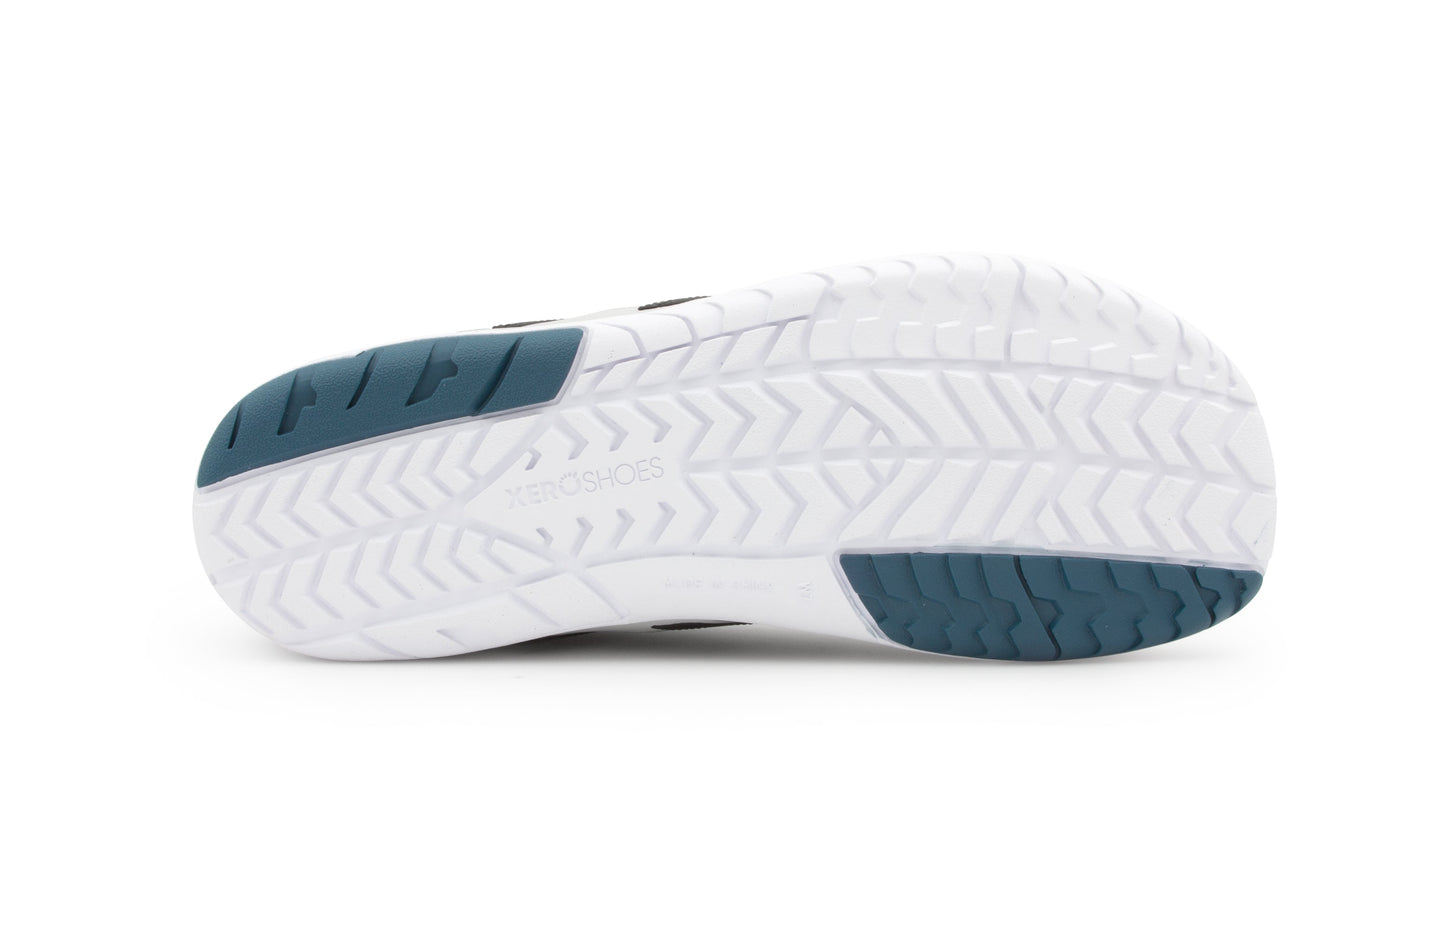 Xero Shoes HFS Womens barfods træningssko/løbesko til kvinder i farven aurora gray, saal